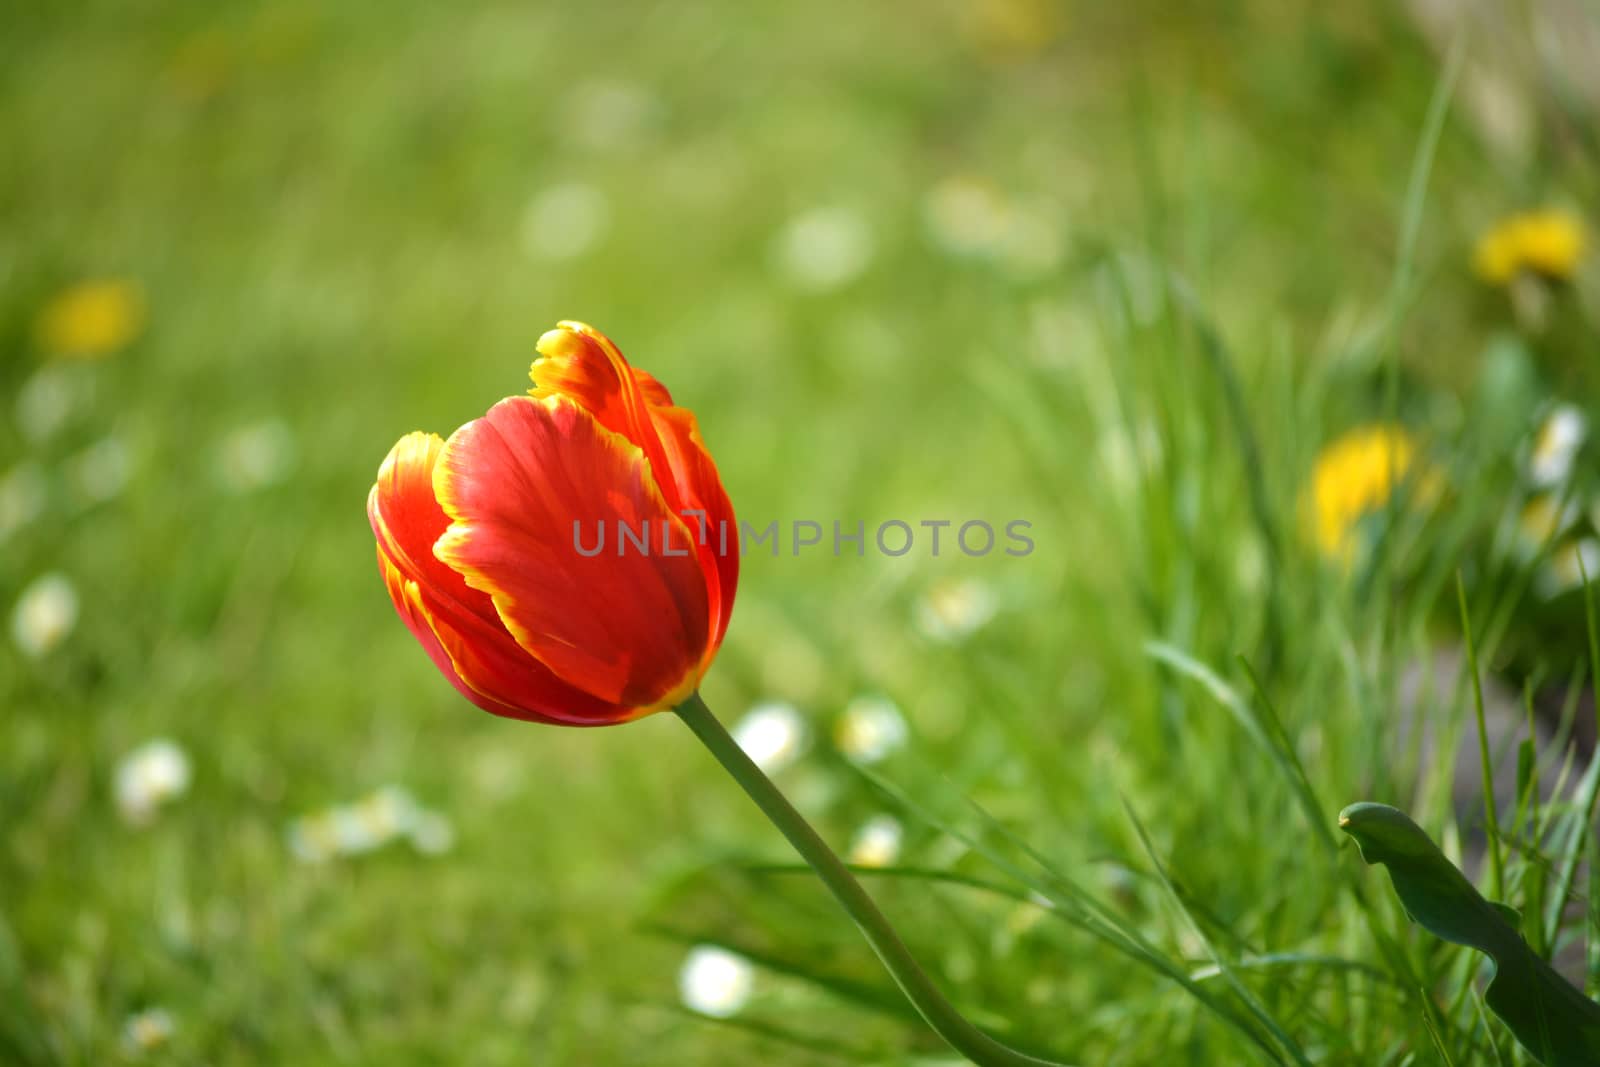 the tulip blossom by madtom